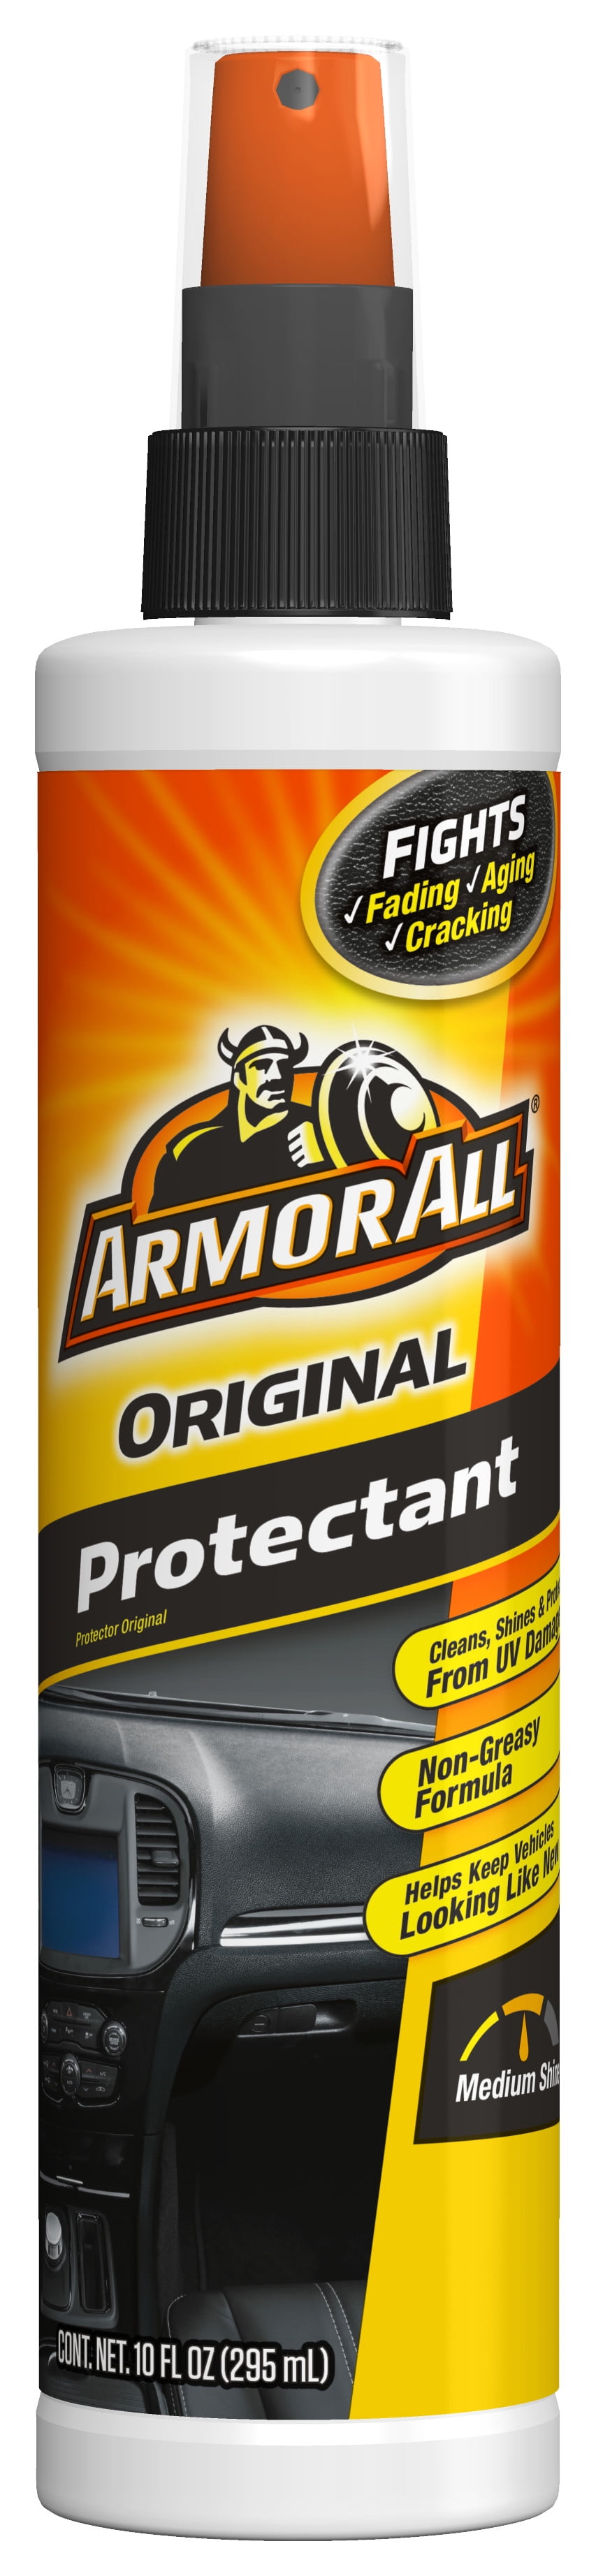 Armor All Original Protectant Pump Bottle - 10 FL OZ